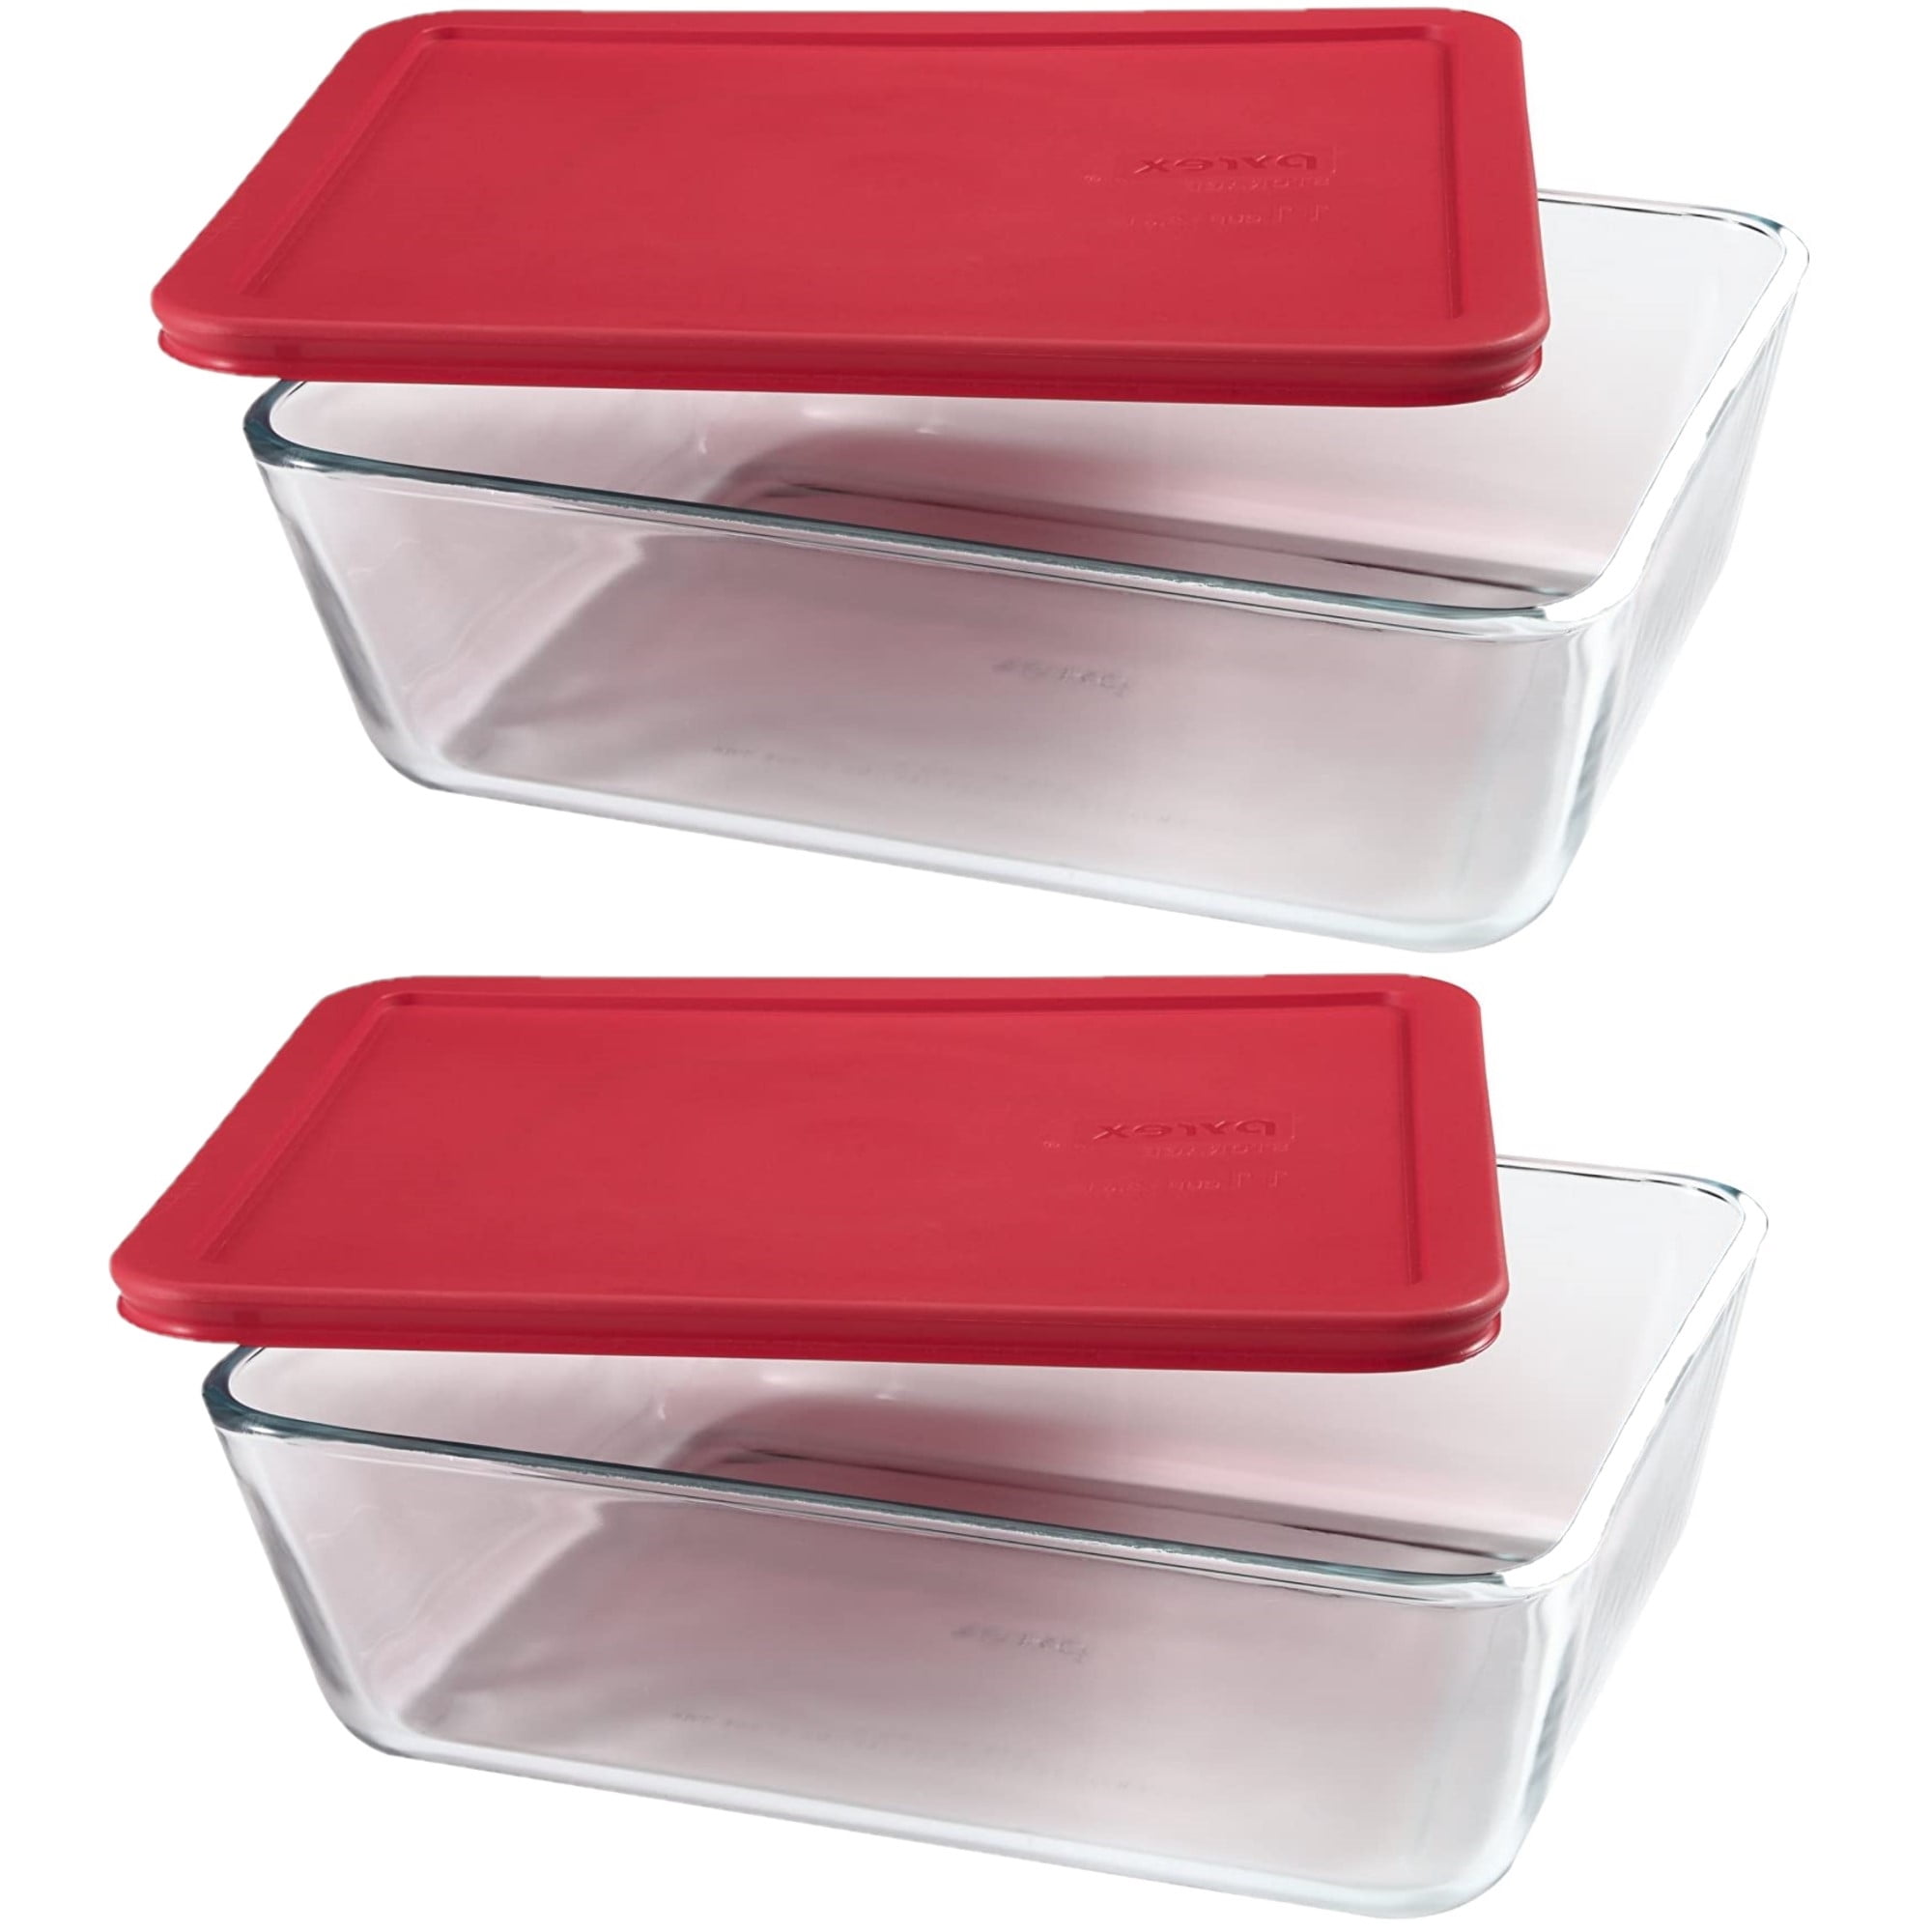 Arcuisine Borosilicate Glass Square Dish With Plastic Lid 8x7x2 34oz for sale online 